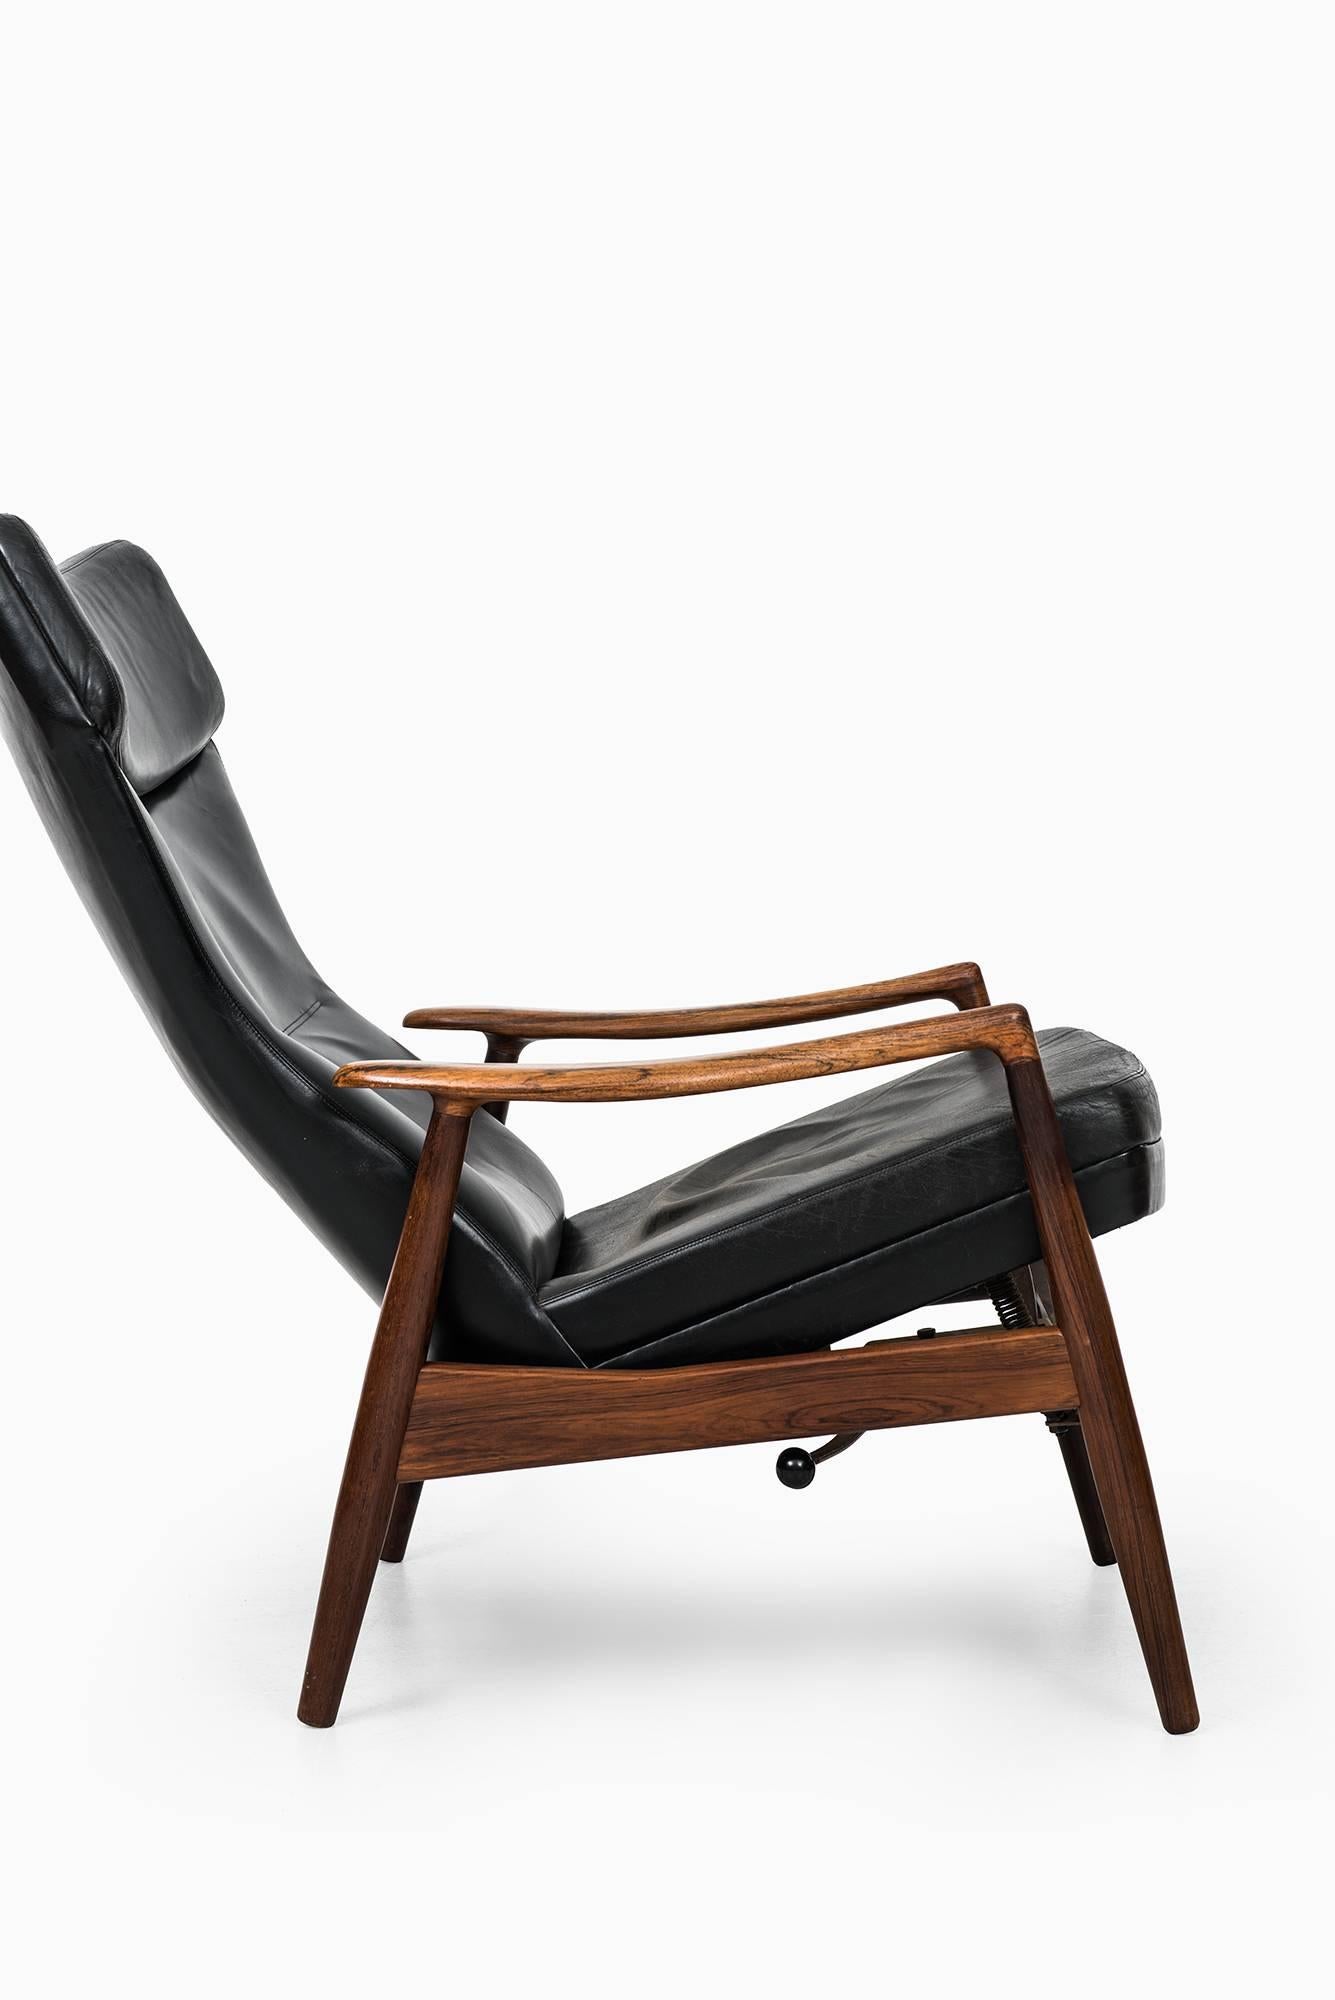 Scandinavian Modern Ib Kofod-Larsen Reclining Chair Model PD-21 by Povl Dinesen in Denmark